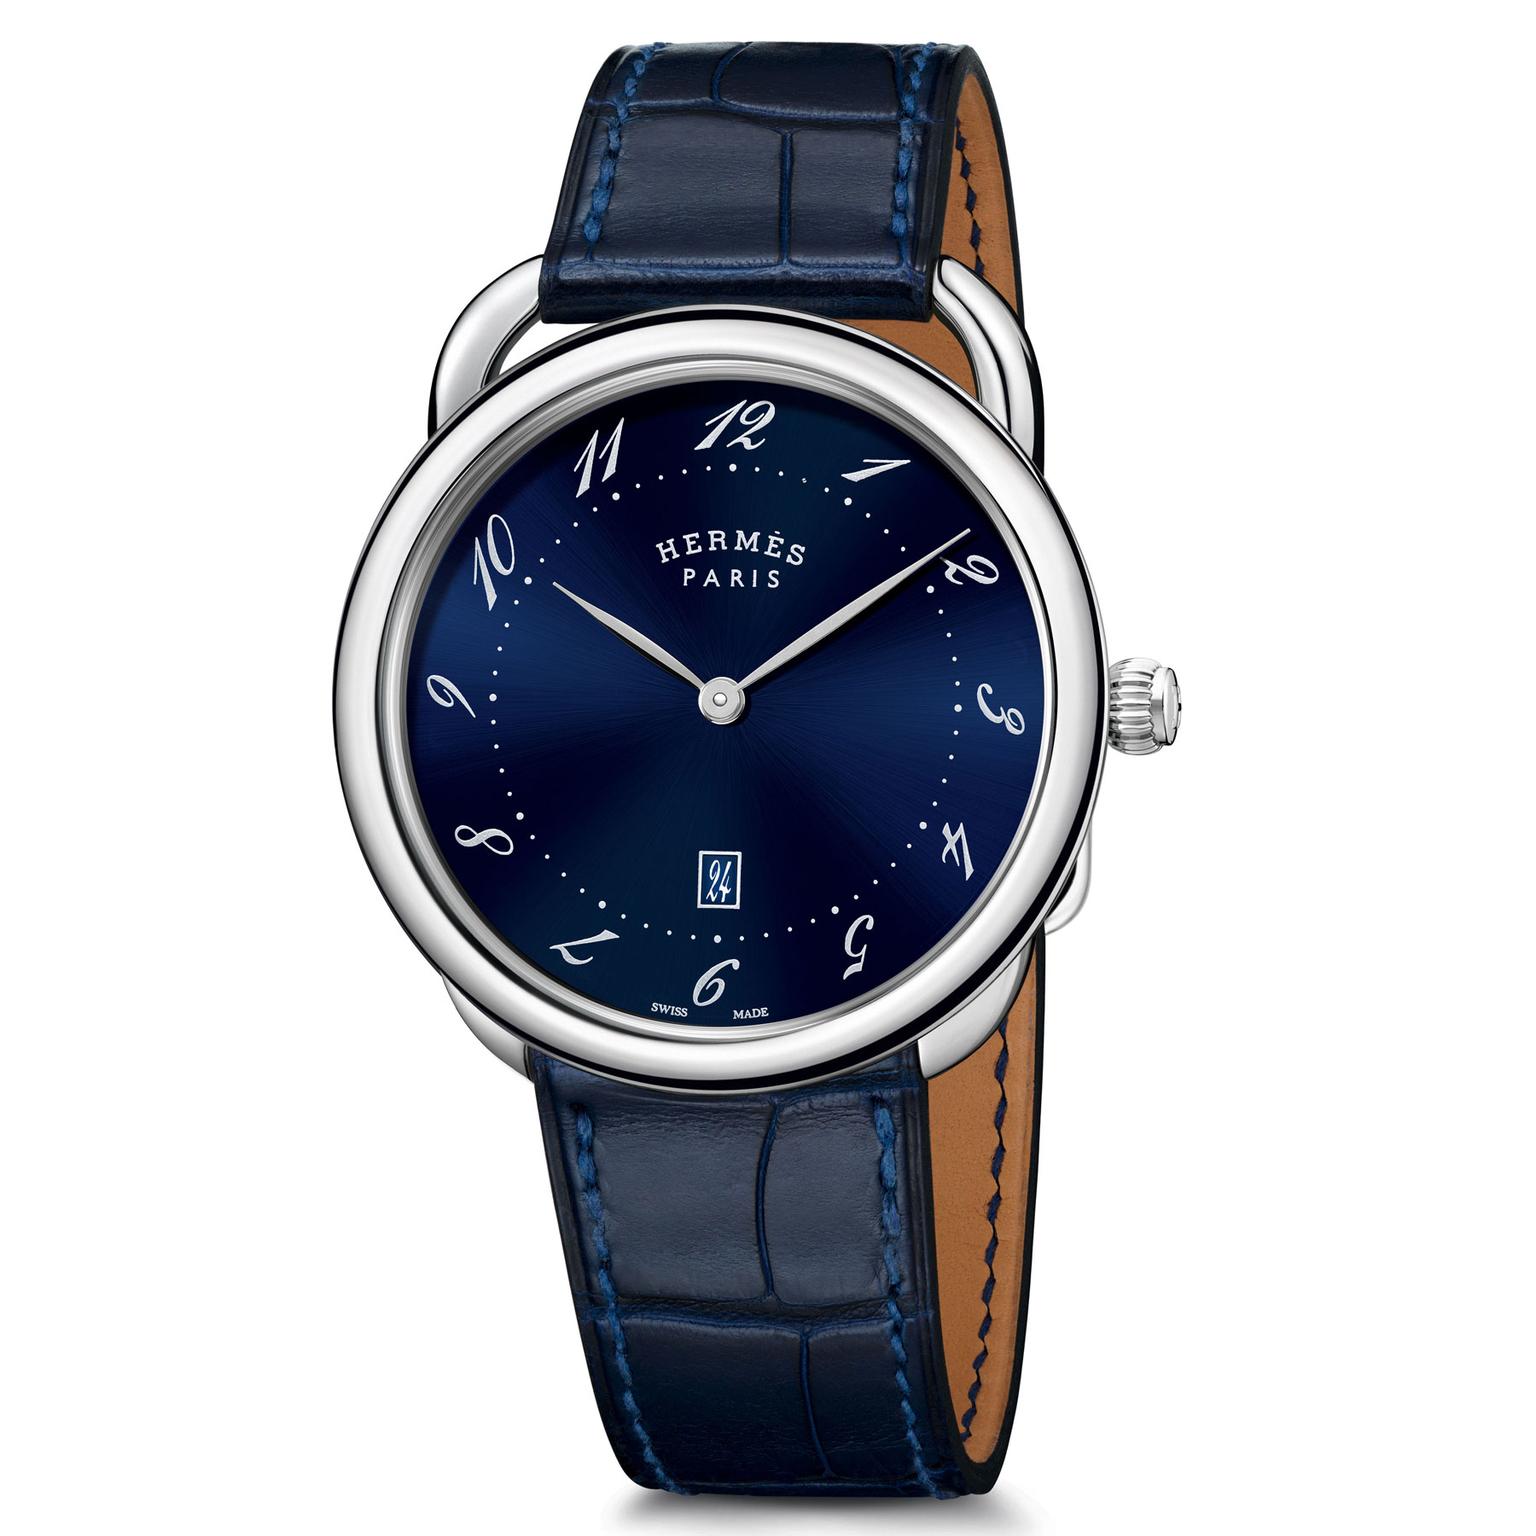 Hermès Arceau Très Grand Modèle watch